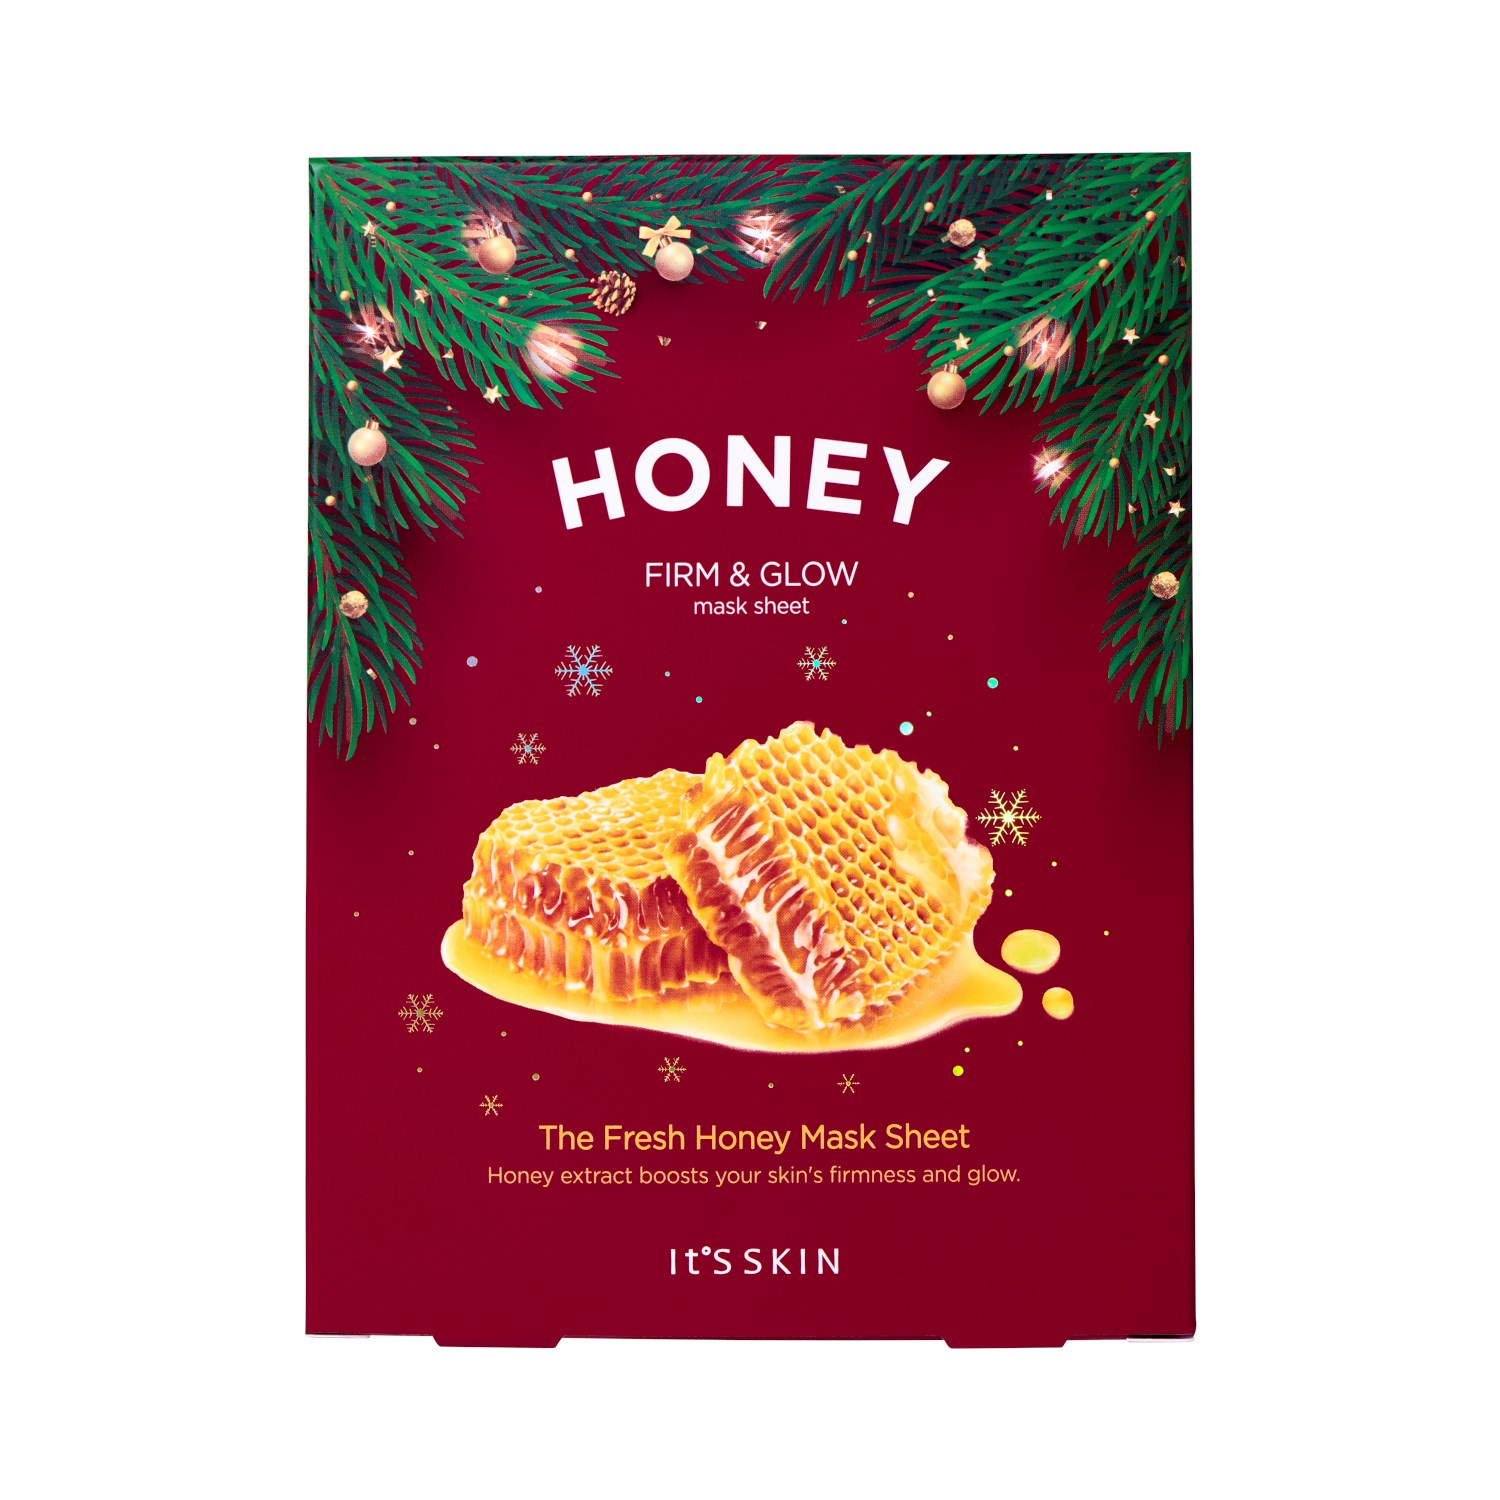 ItS SKIN The Fresh Mask Sheet Honey Firm & Glow Gift Box